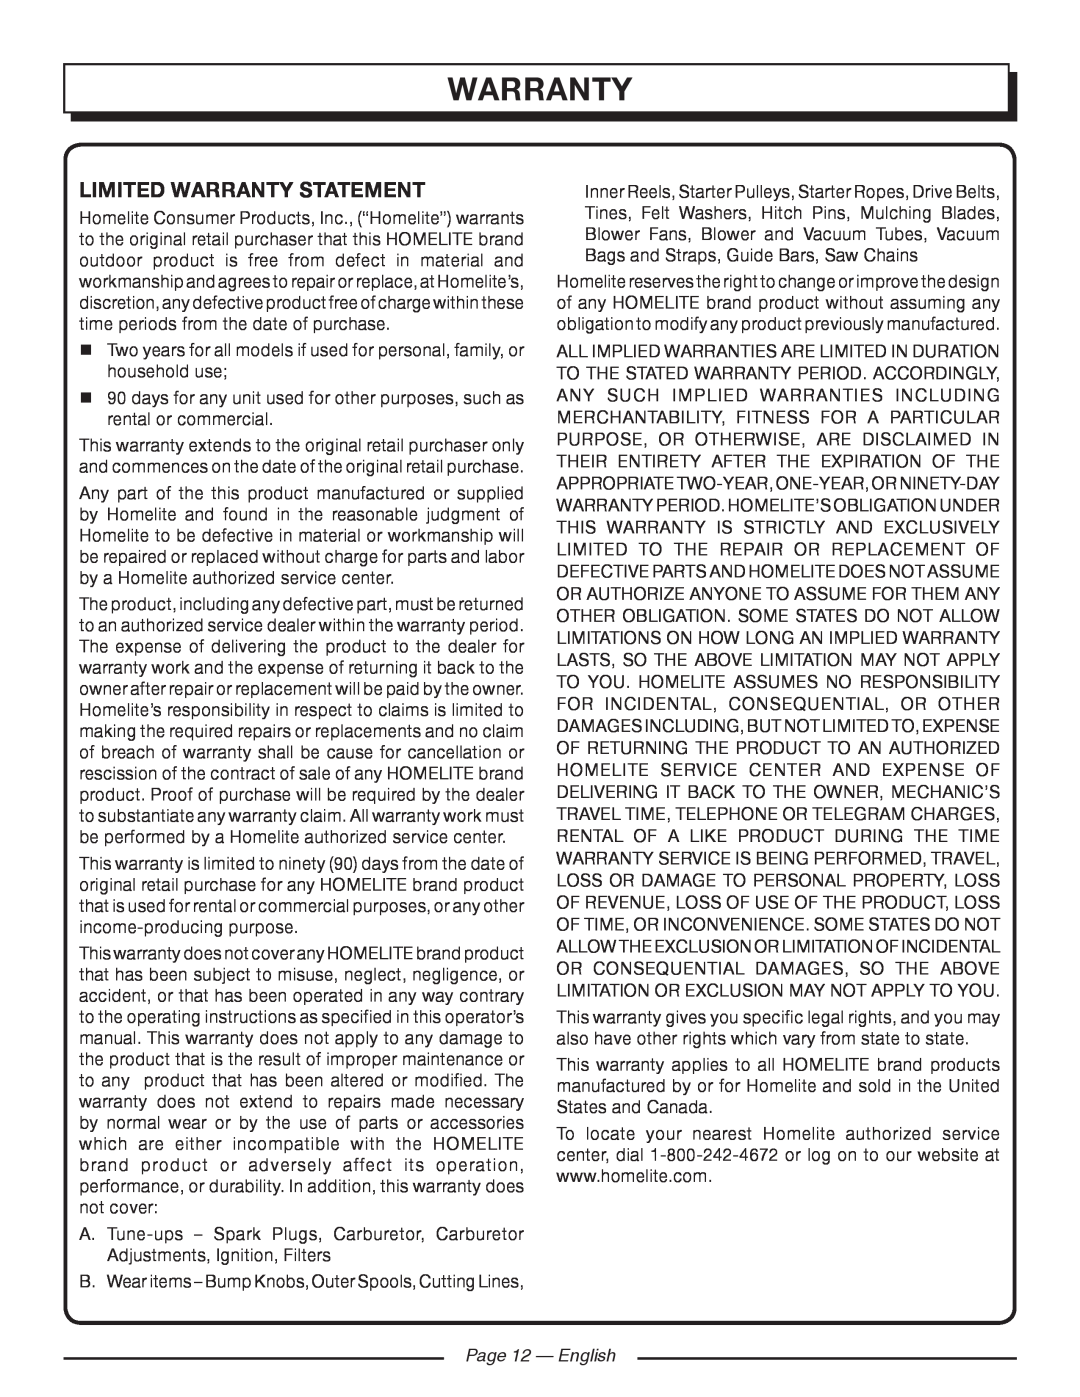 Homelite UT09520 manuel dutilisation Limited Warranty Statement, Page 12 - English 